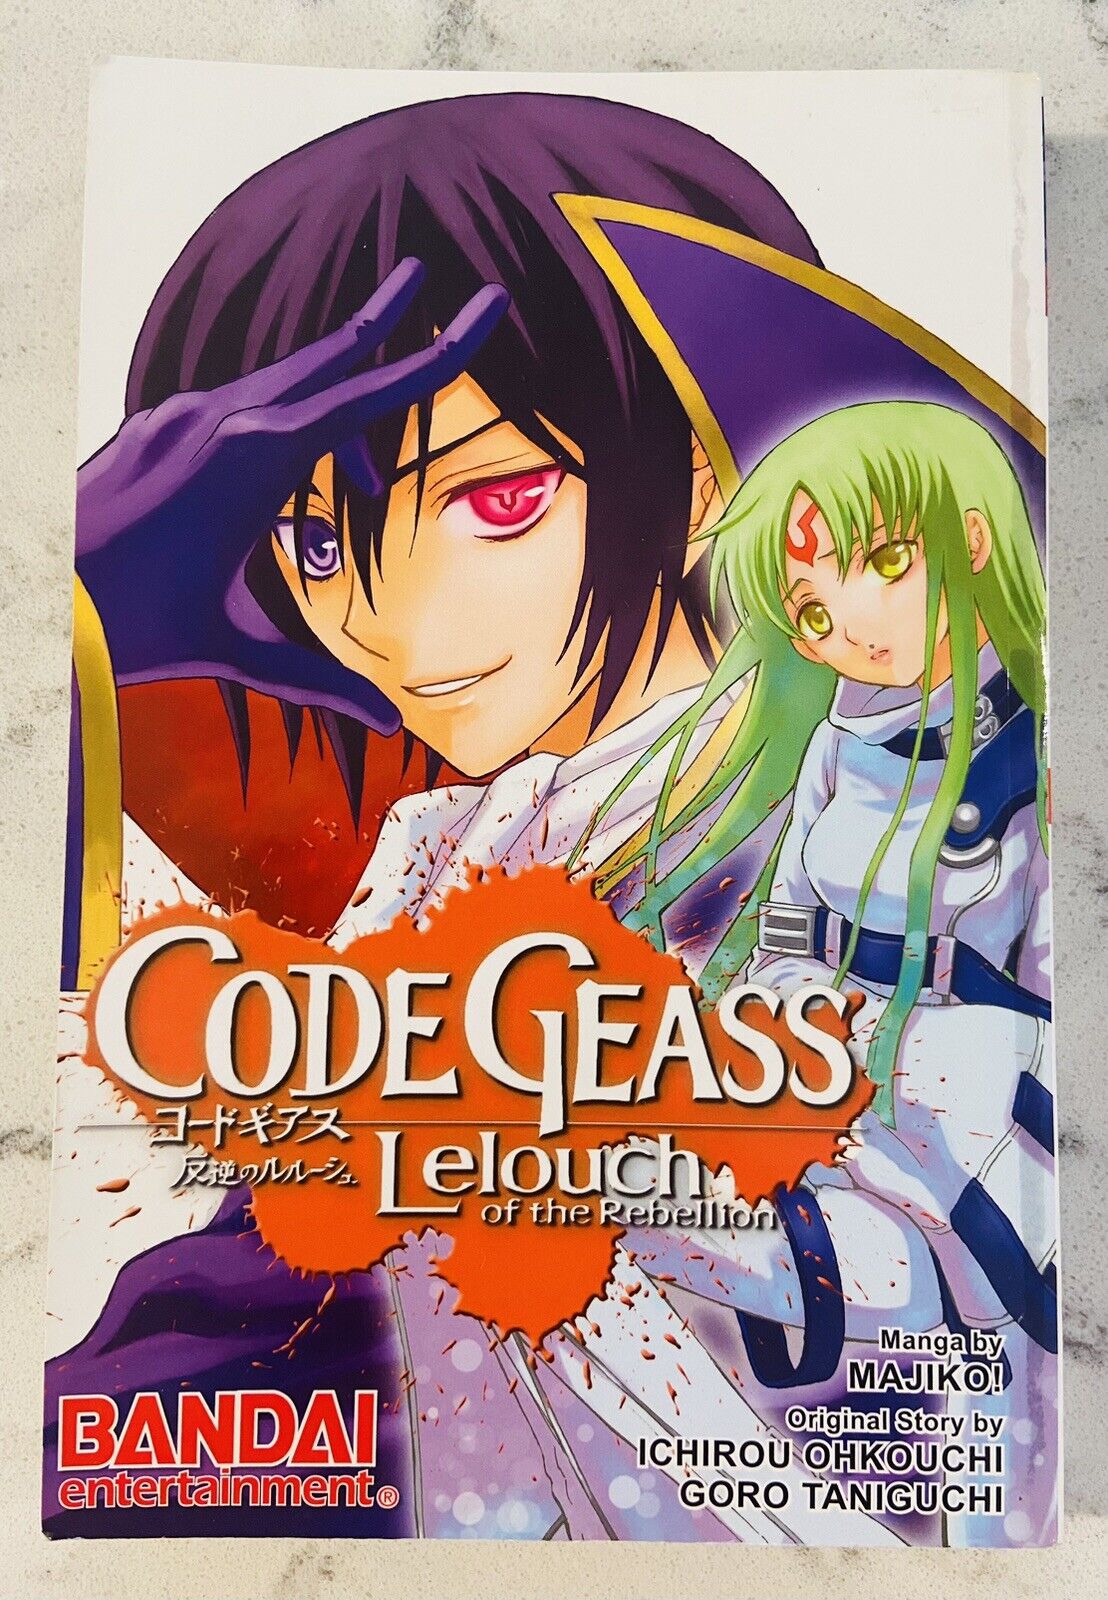 Code Geass Volume 3: Lelouch of the Rebellion ANIME BANDAI RARE OOP MAGNA